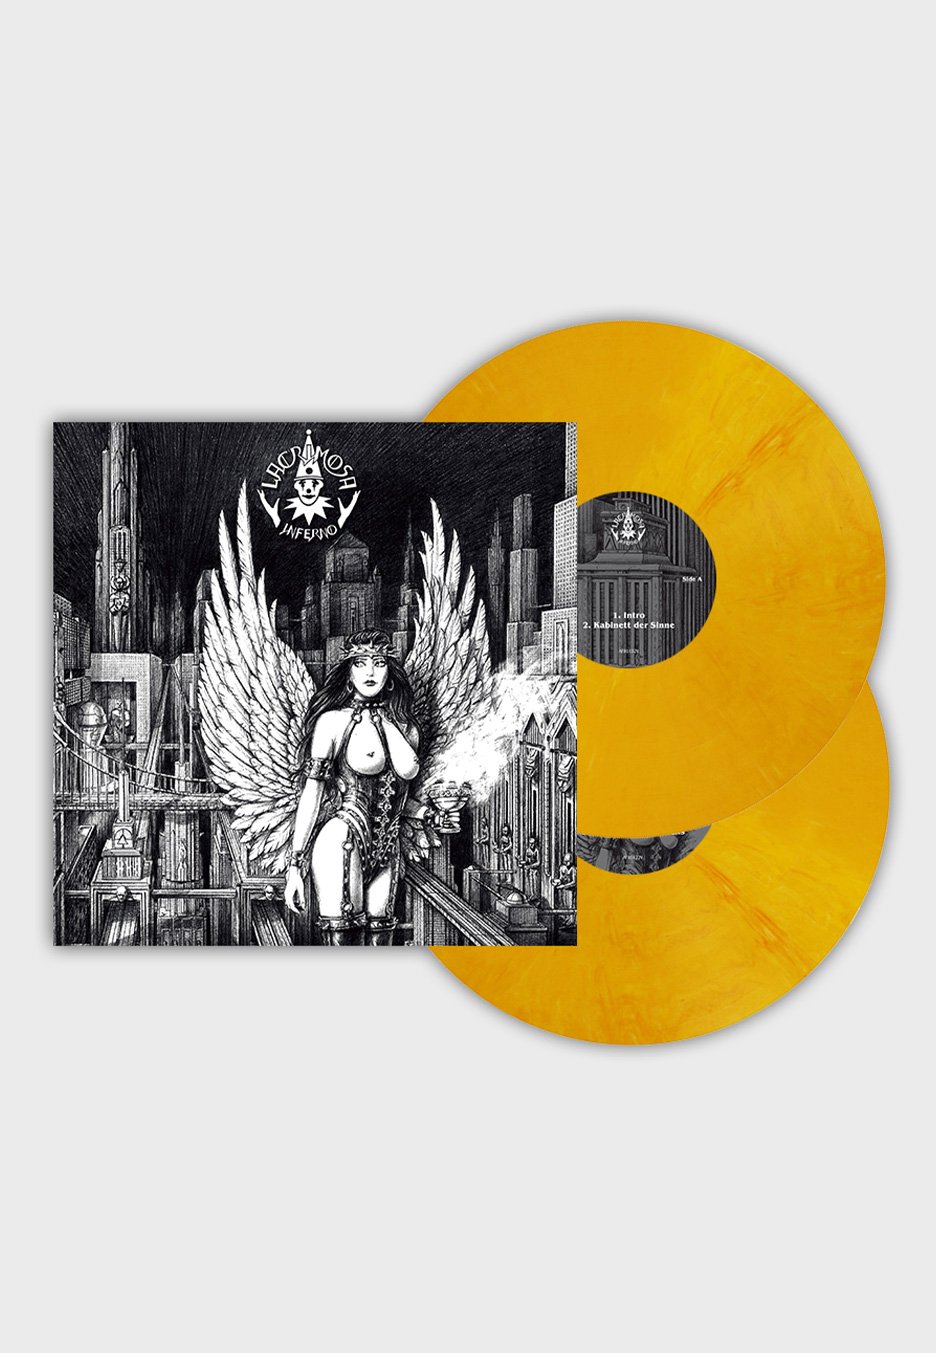 Lacrimosa - Inferno Ltd. Yellow/White/Orange/Red - Marbled 2 Vinyl